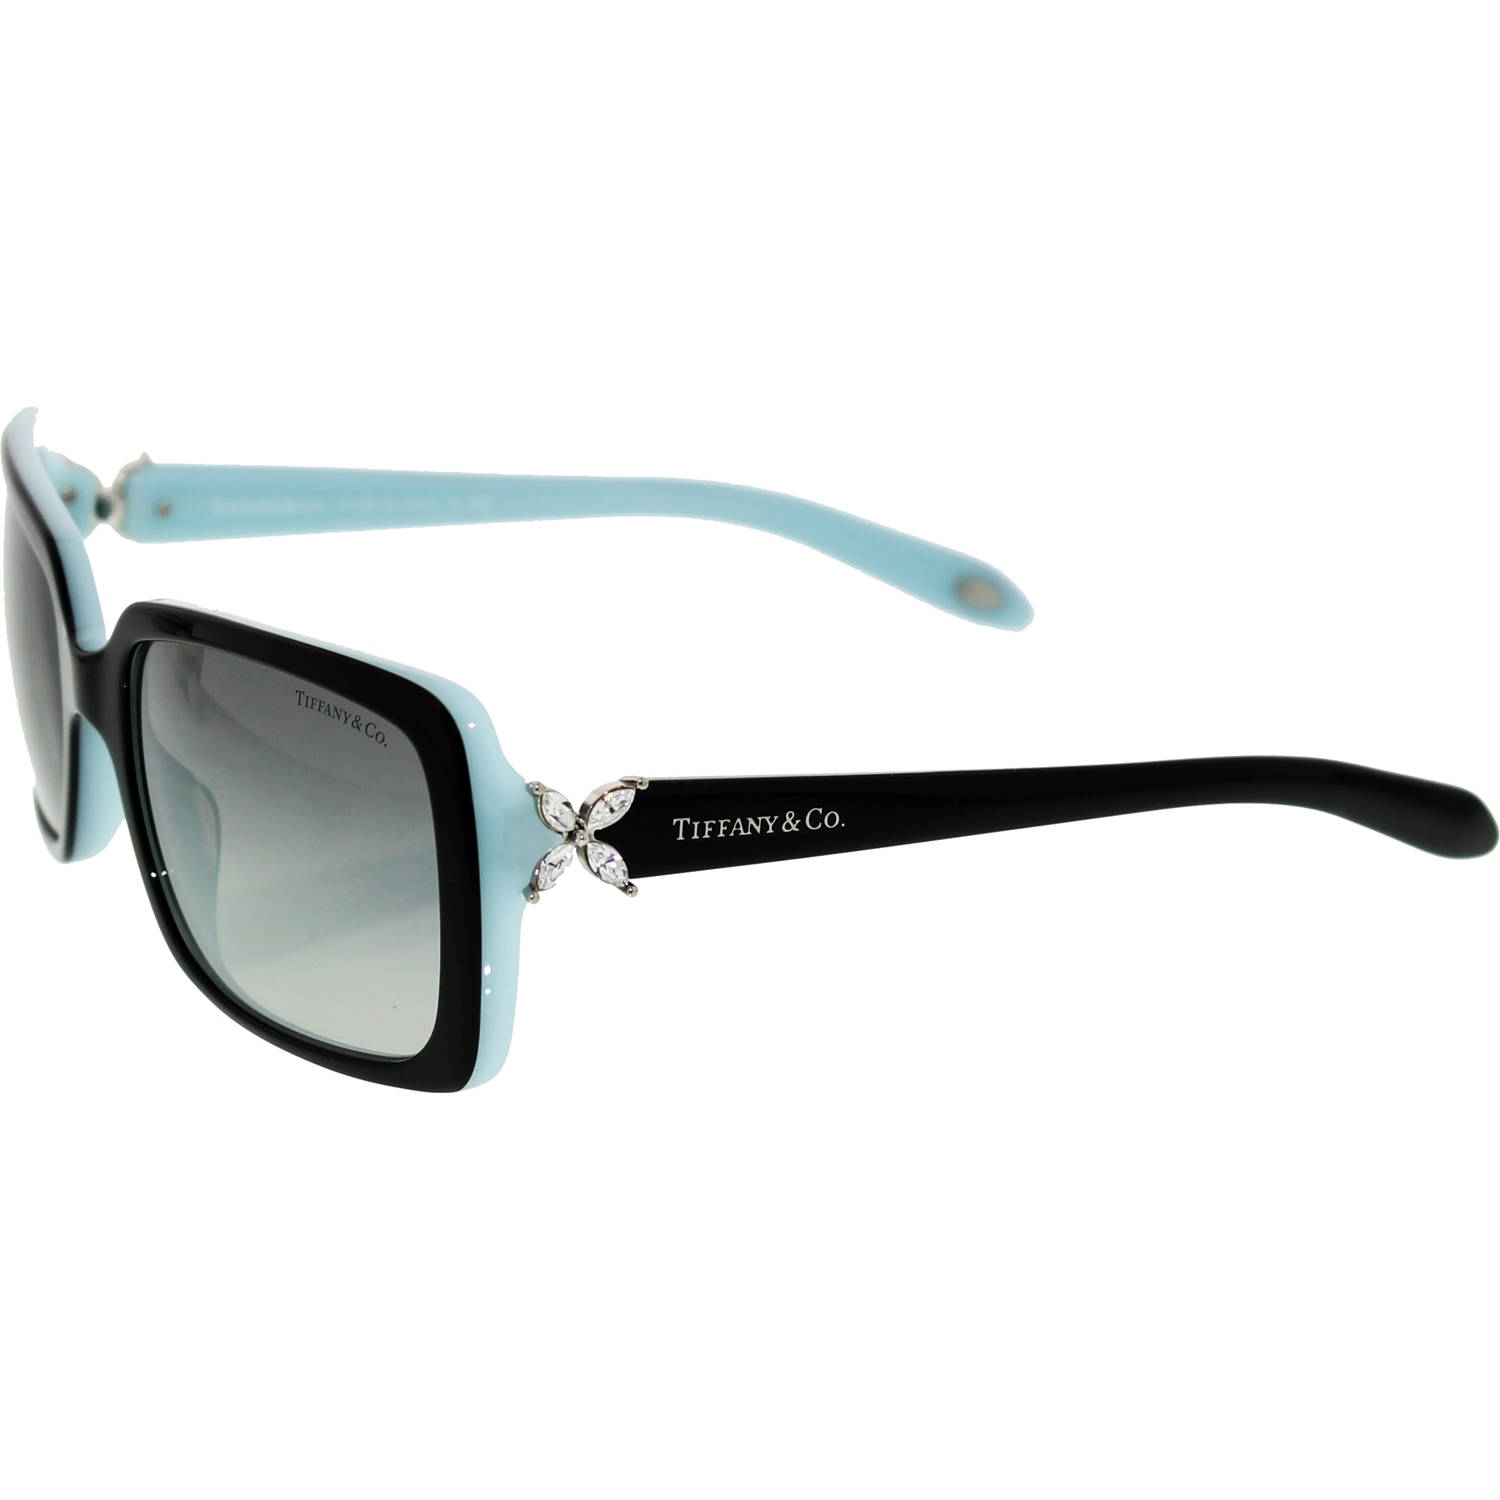 Tiffany & Co. Rectangular Sunglasses Victoria Tf 4047b - 80553c Wallpaper